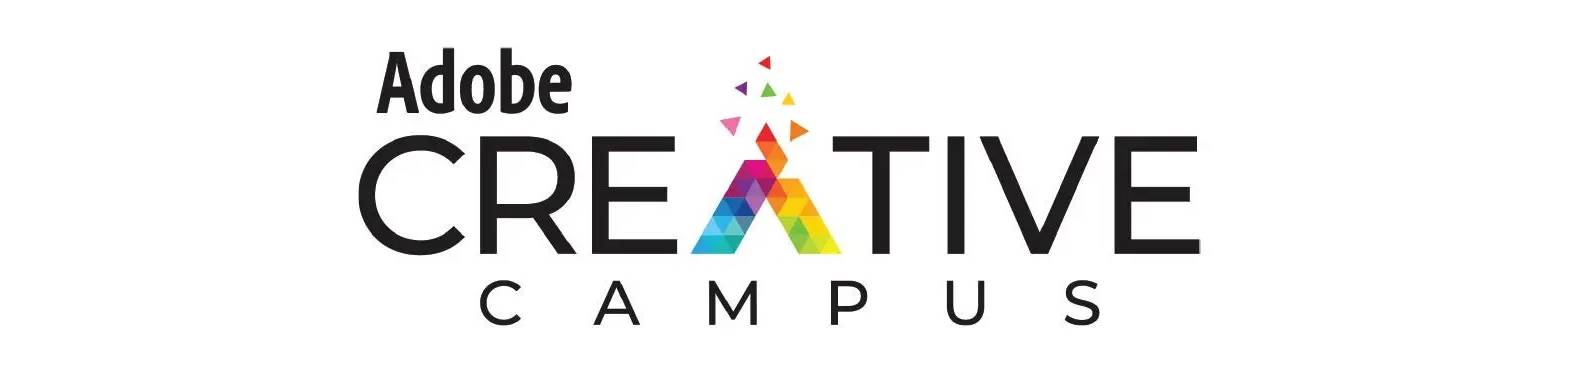 Adobe creative campus logo